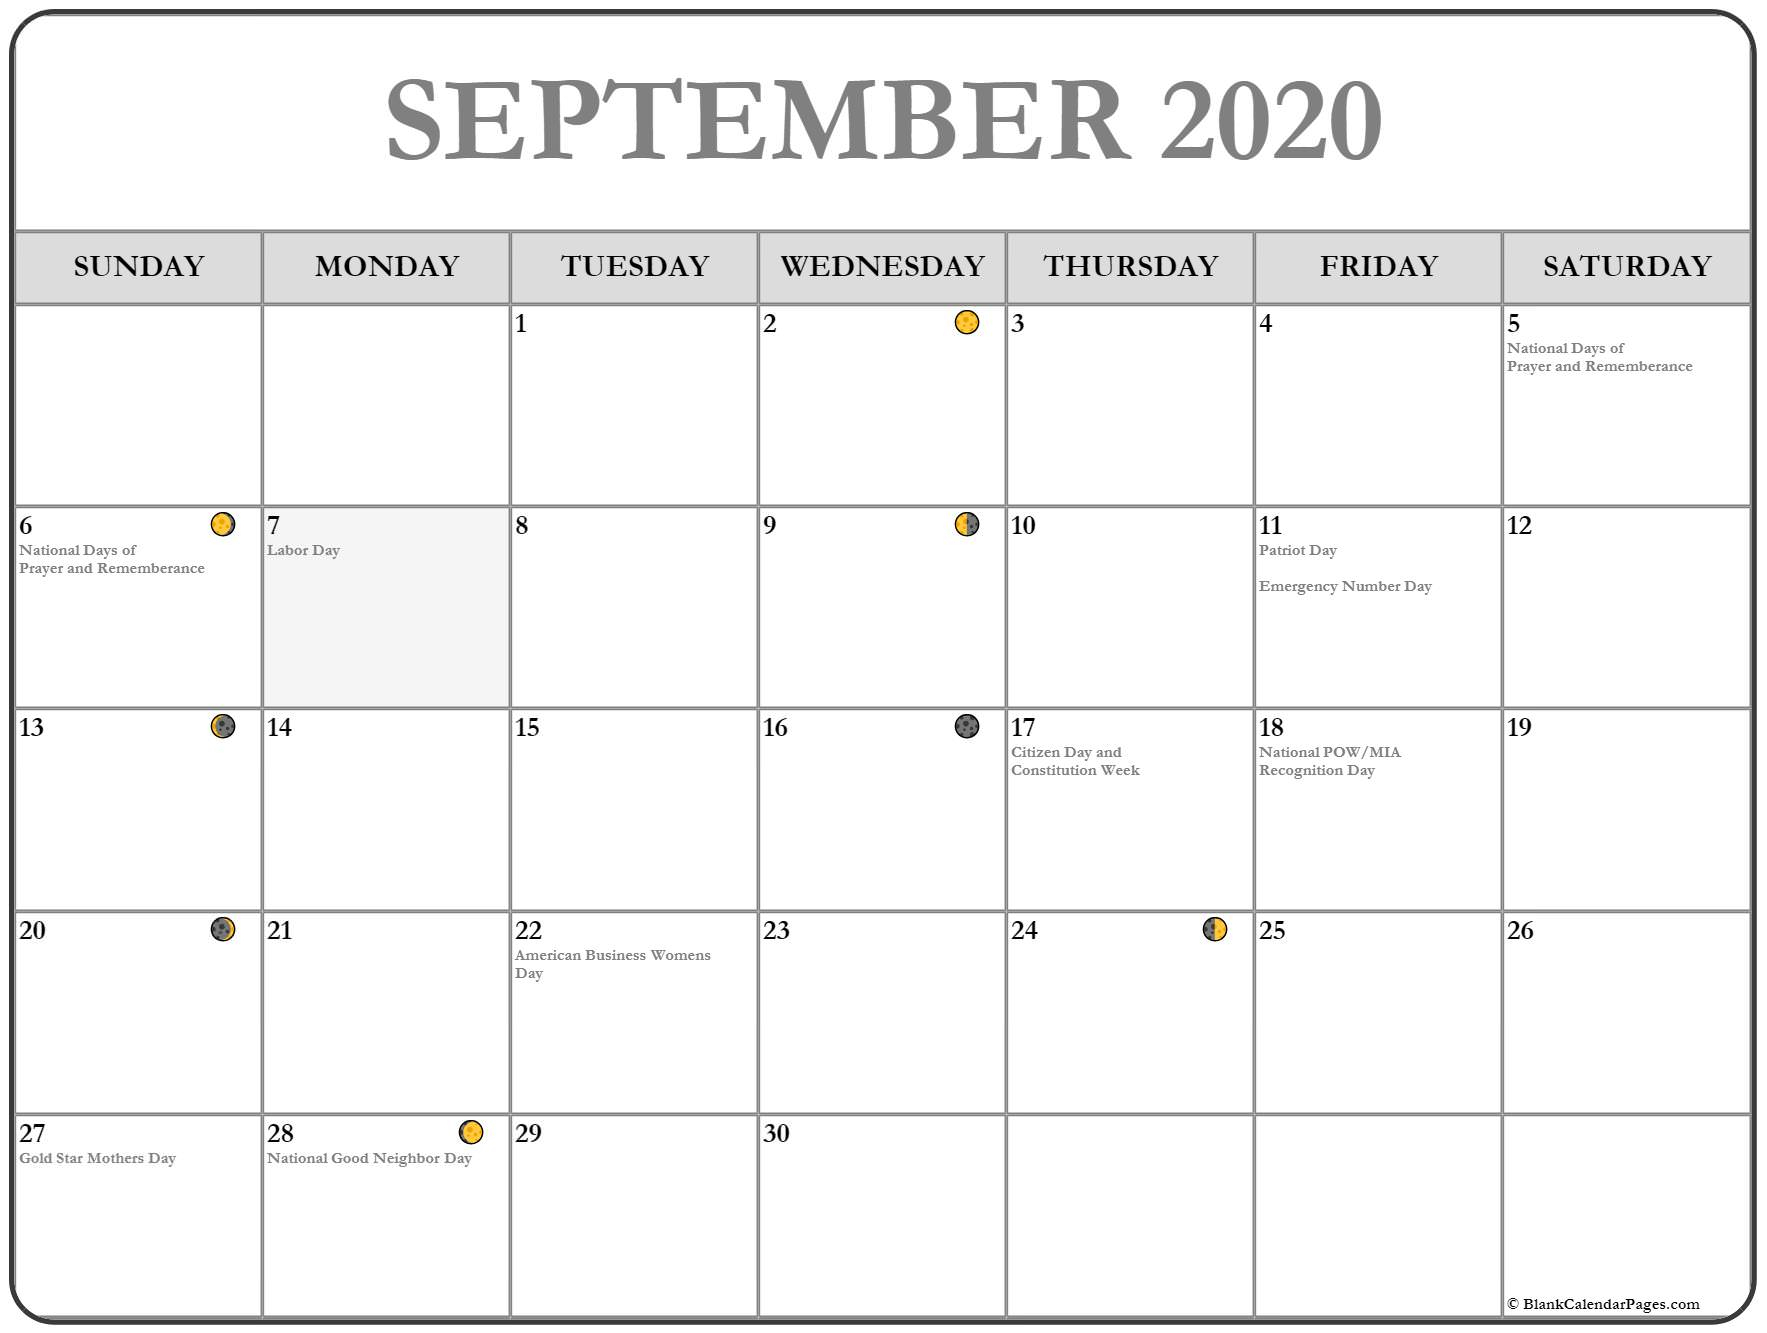 September 2020 Lunar Calendar | Moon Phase Calendar